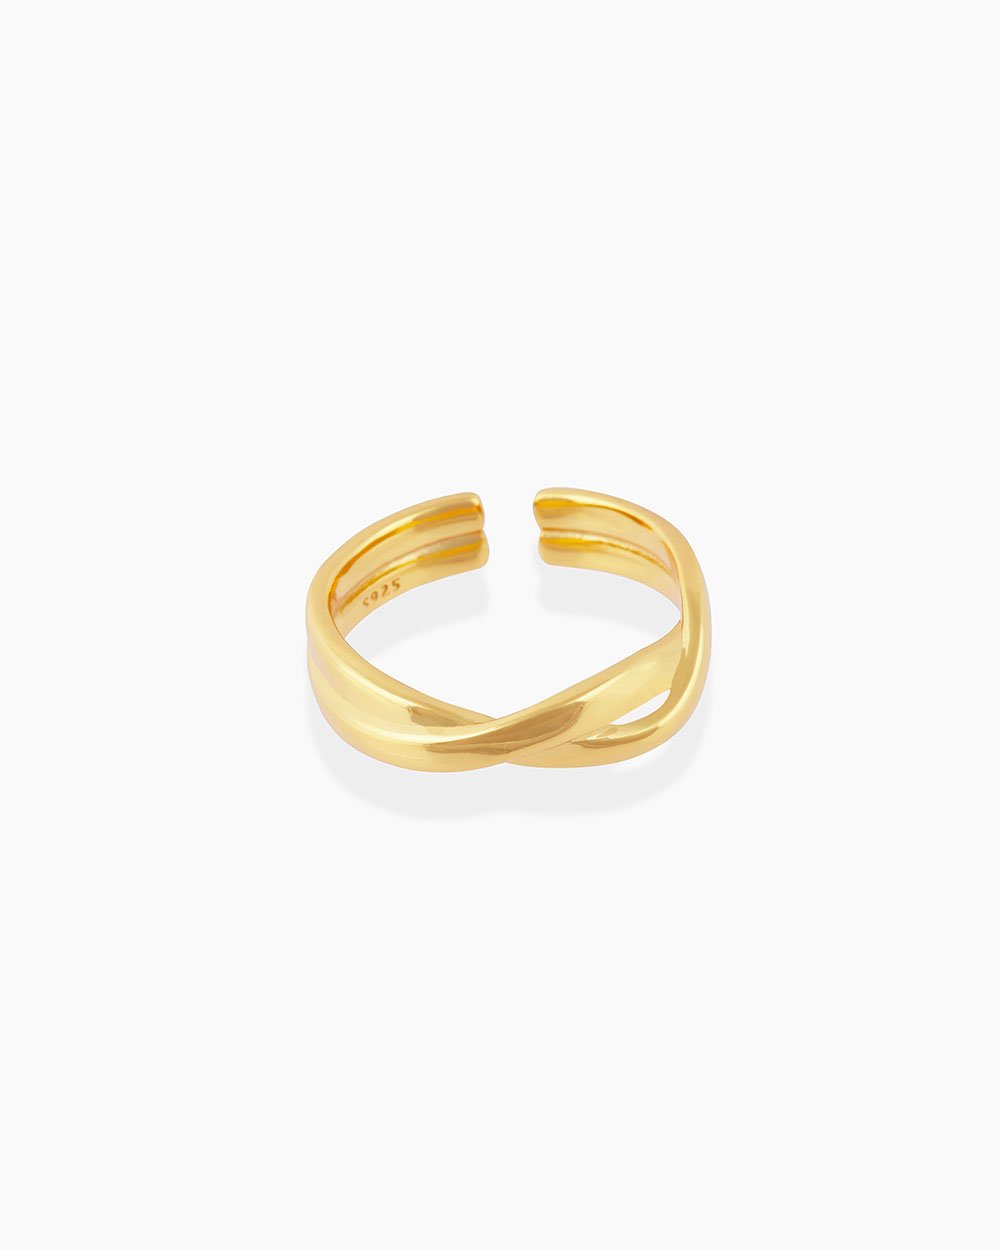 Riley Gold Ring